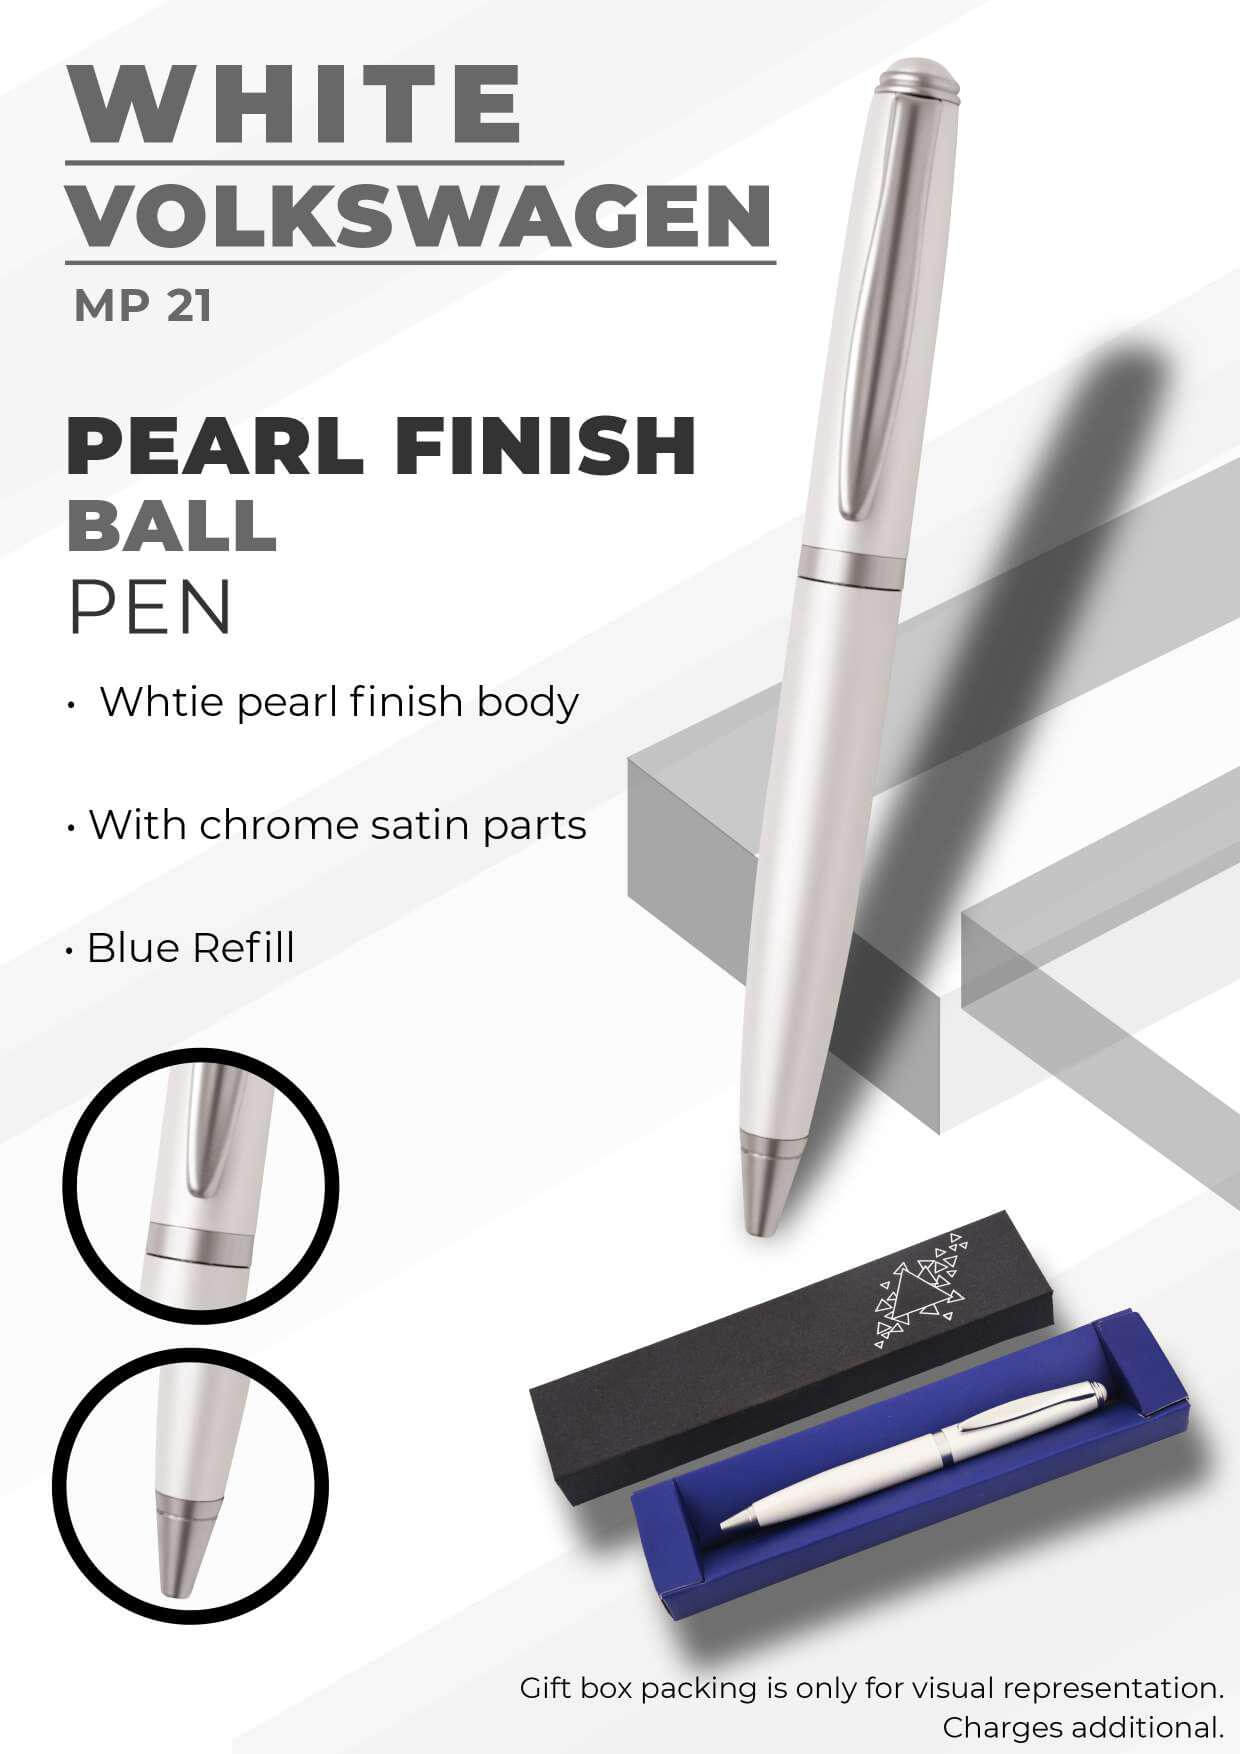 Pearl Finish Ball Pen